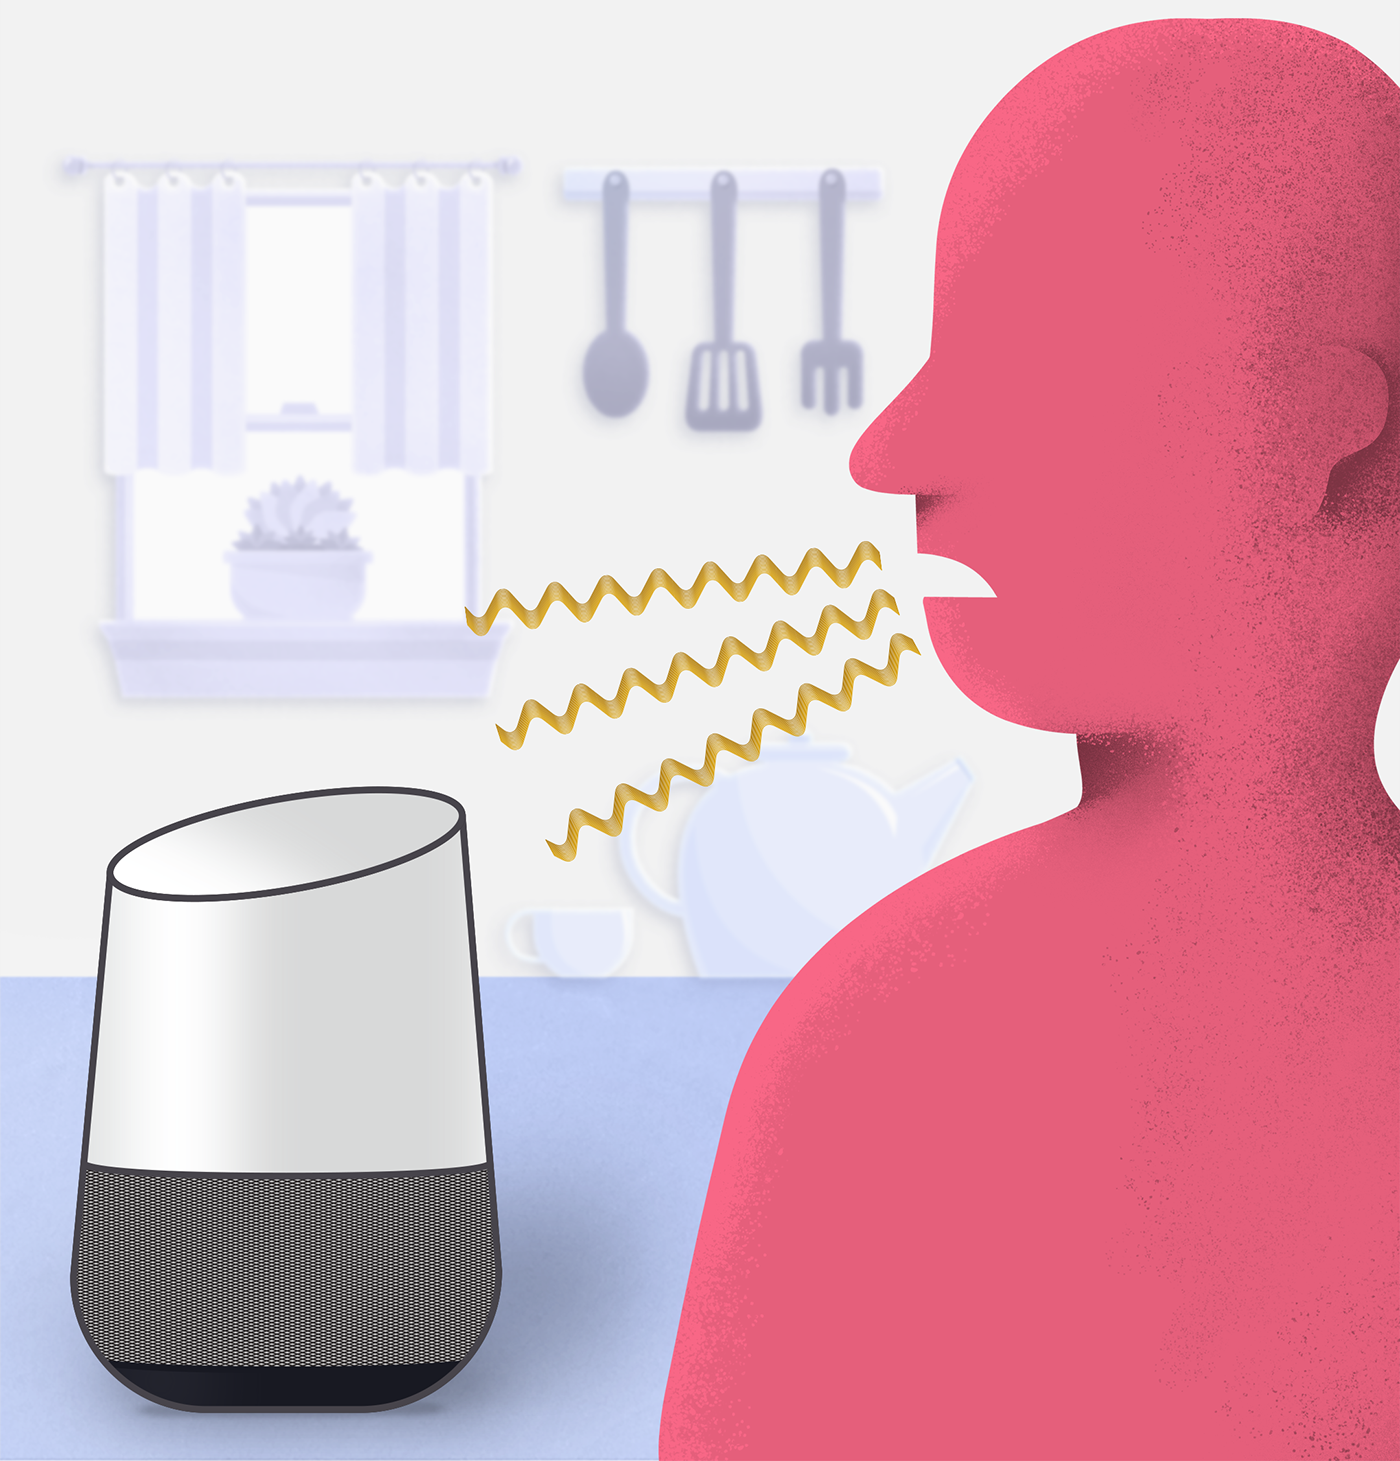 psfk Health concept future of health Google Home amazon alexa Siri ai artificial intelligence